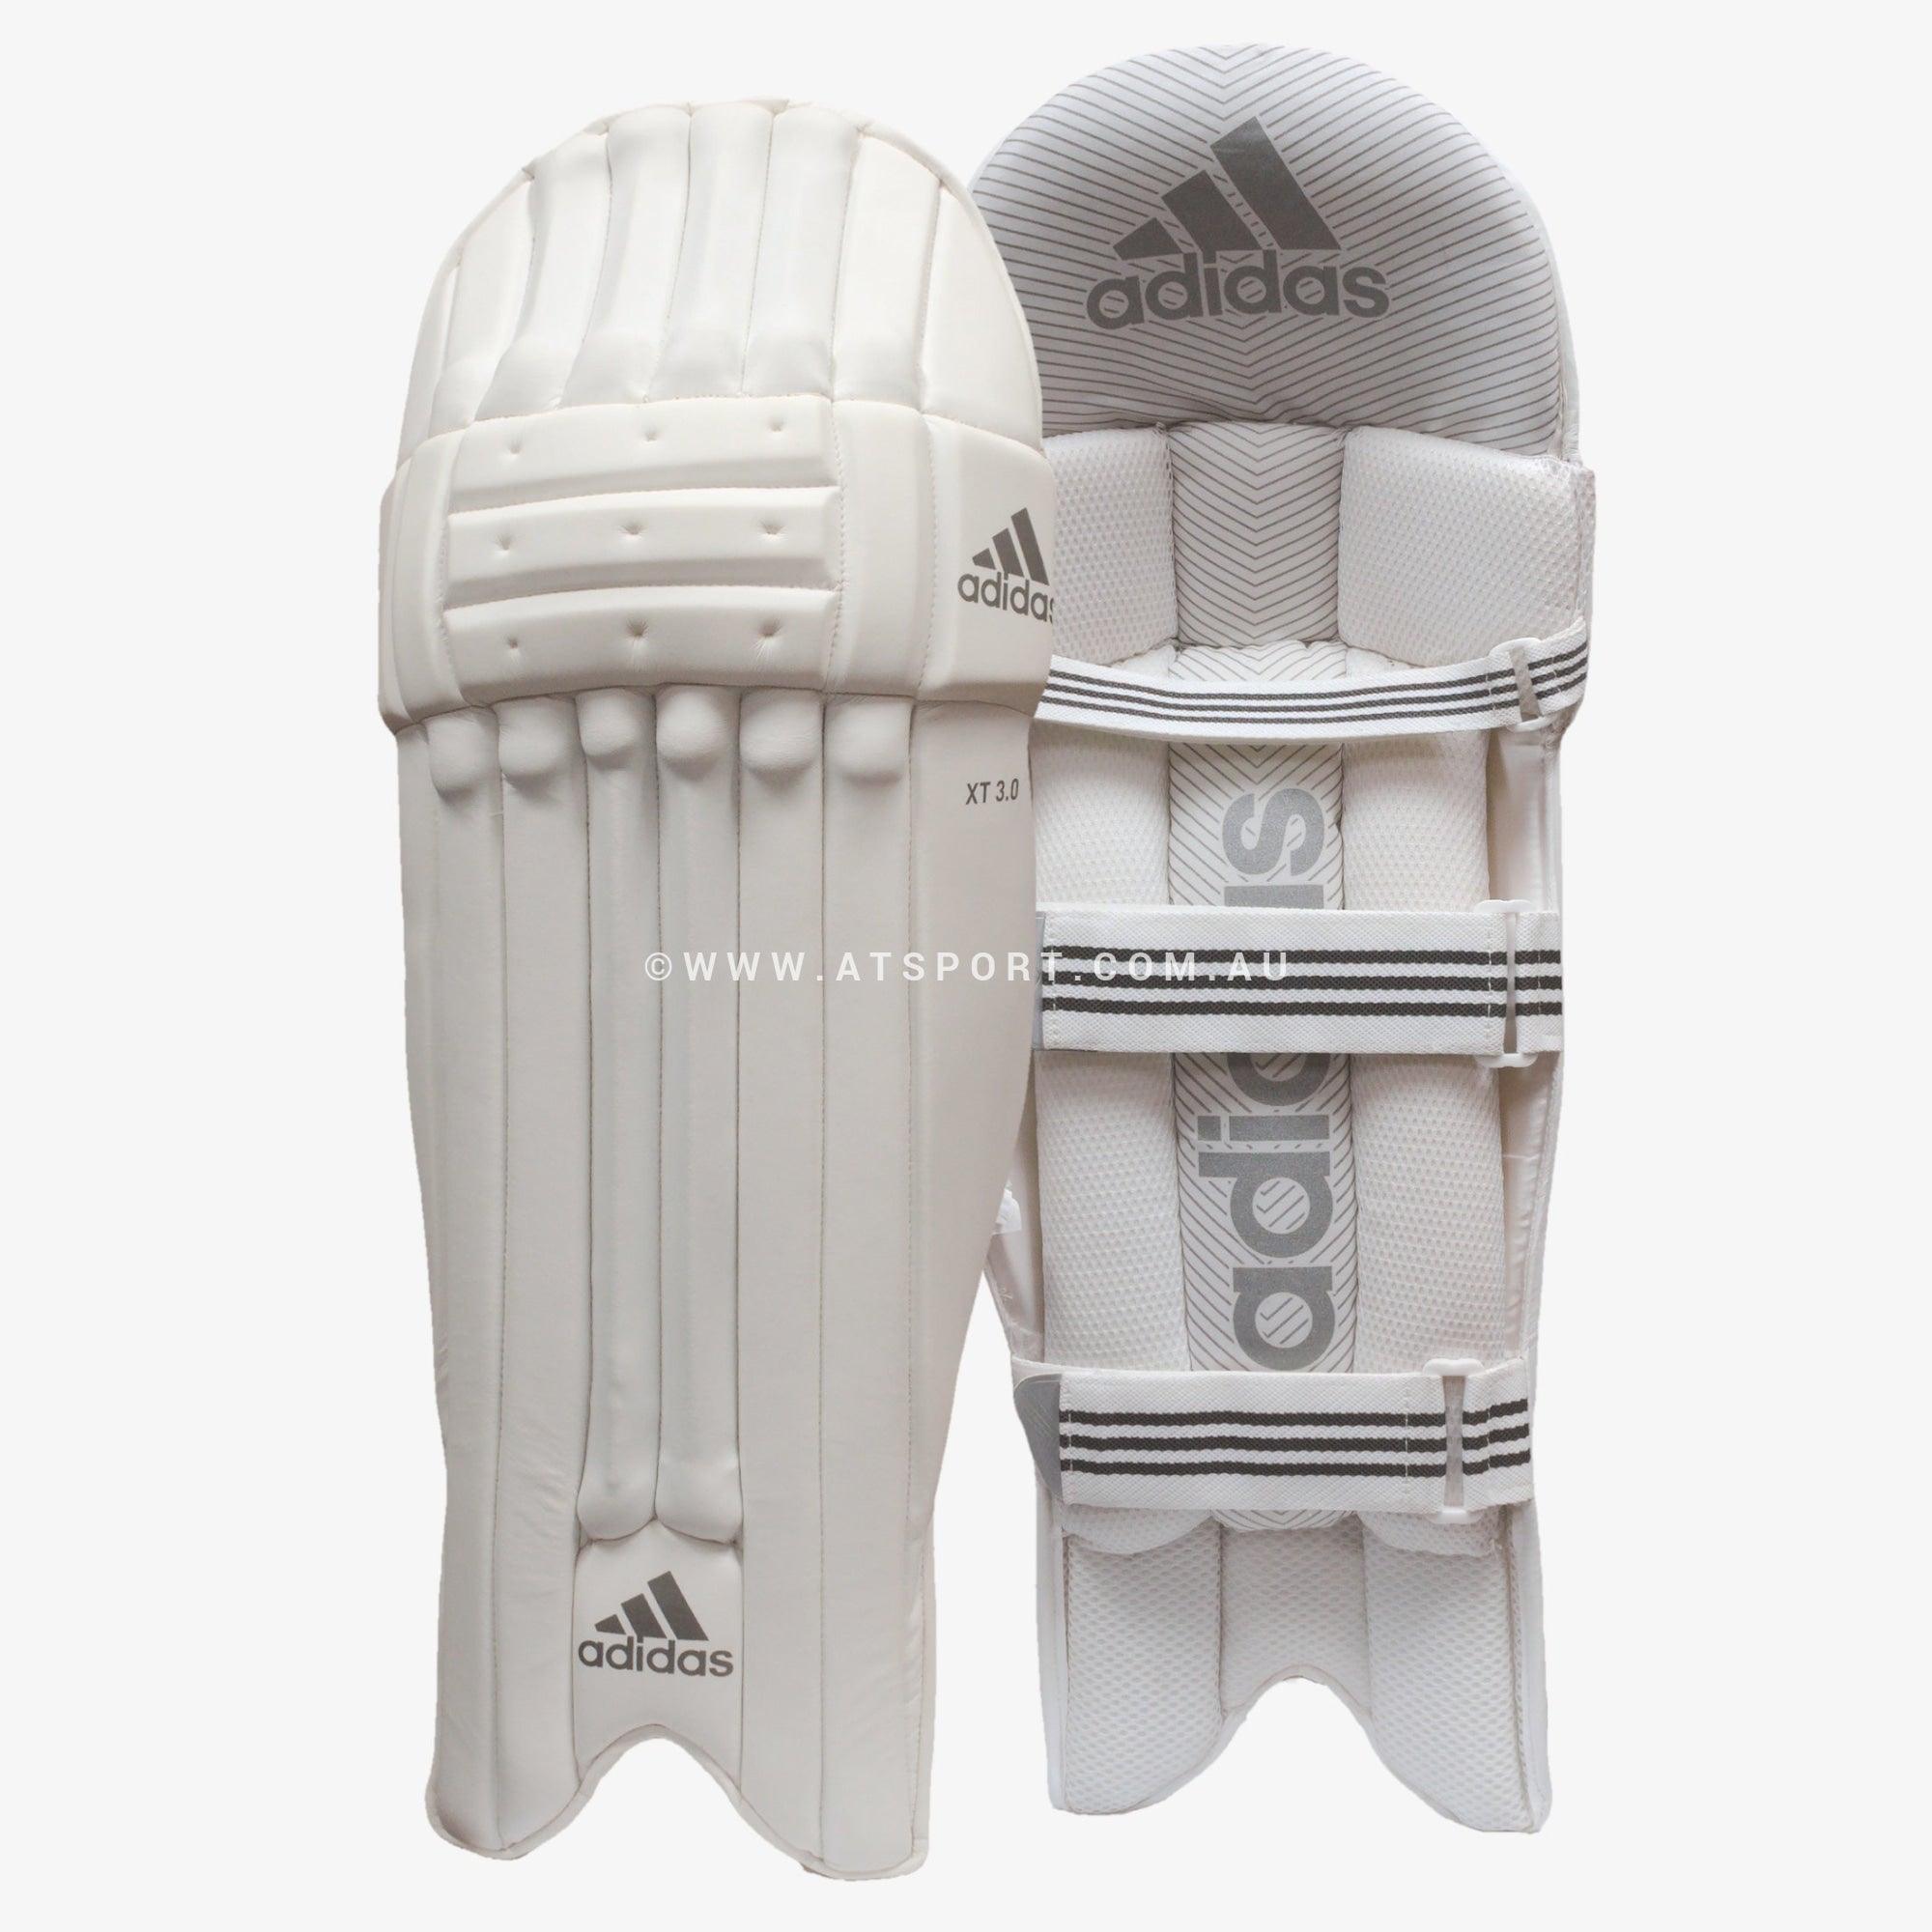 Adidas XT 3.0 Cricket Batting Pads - LARGE ADULT - AT Sports